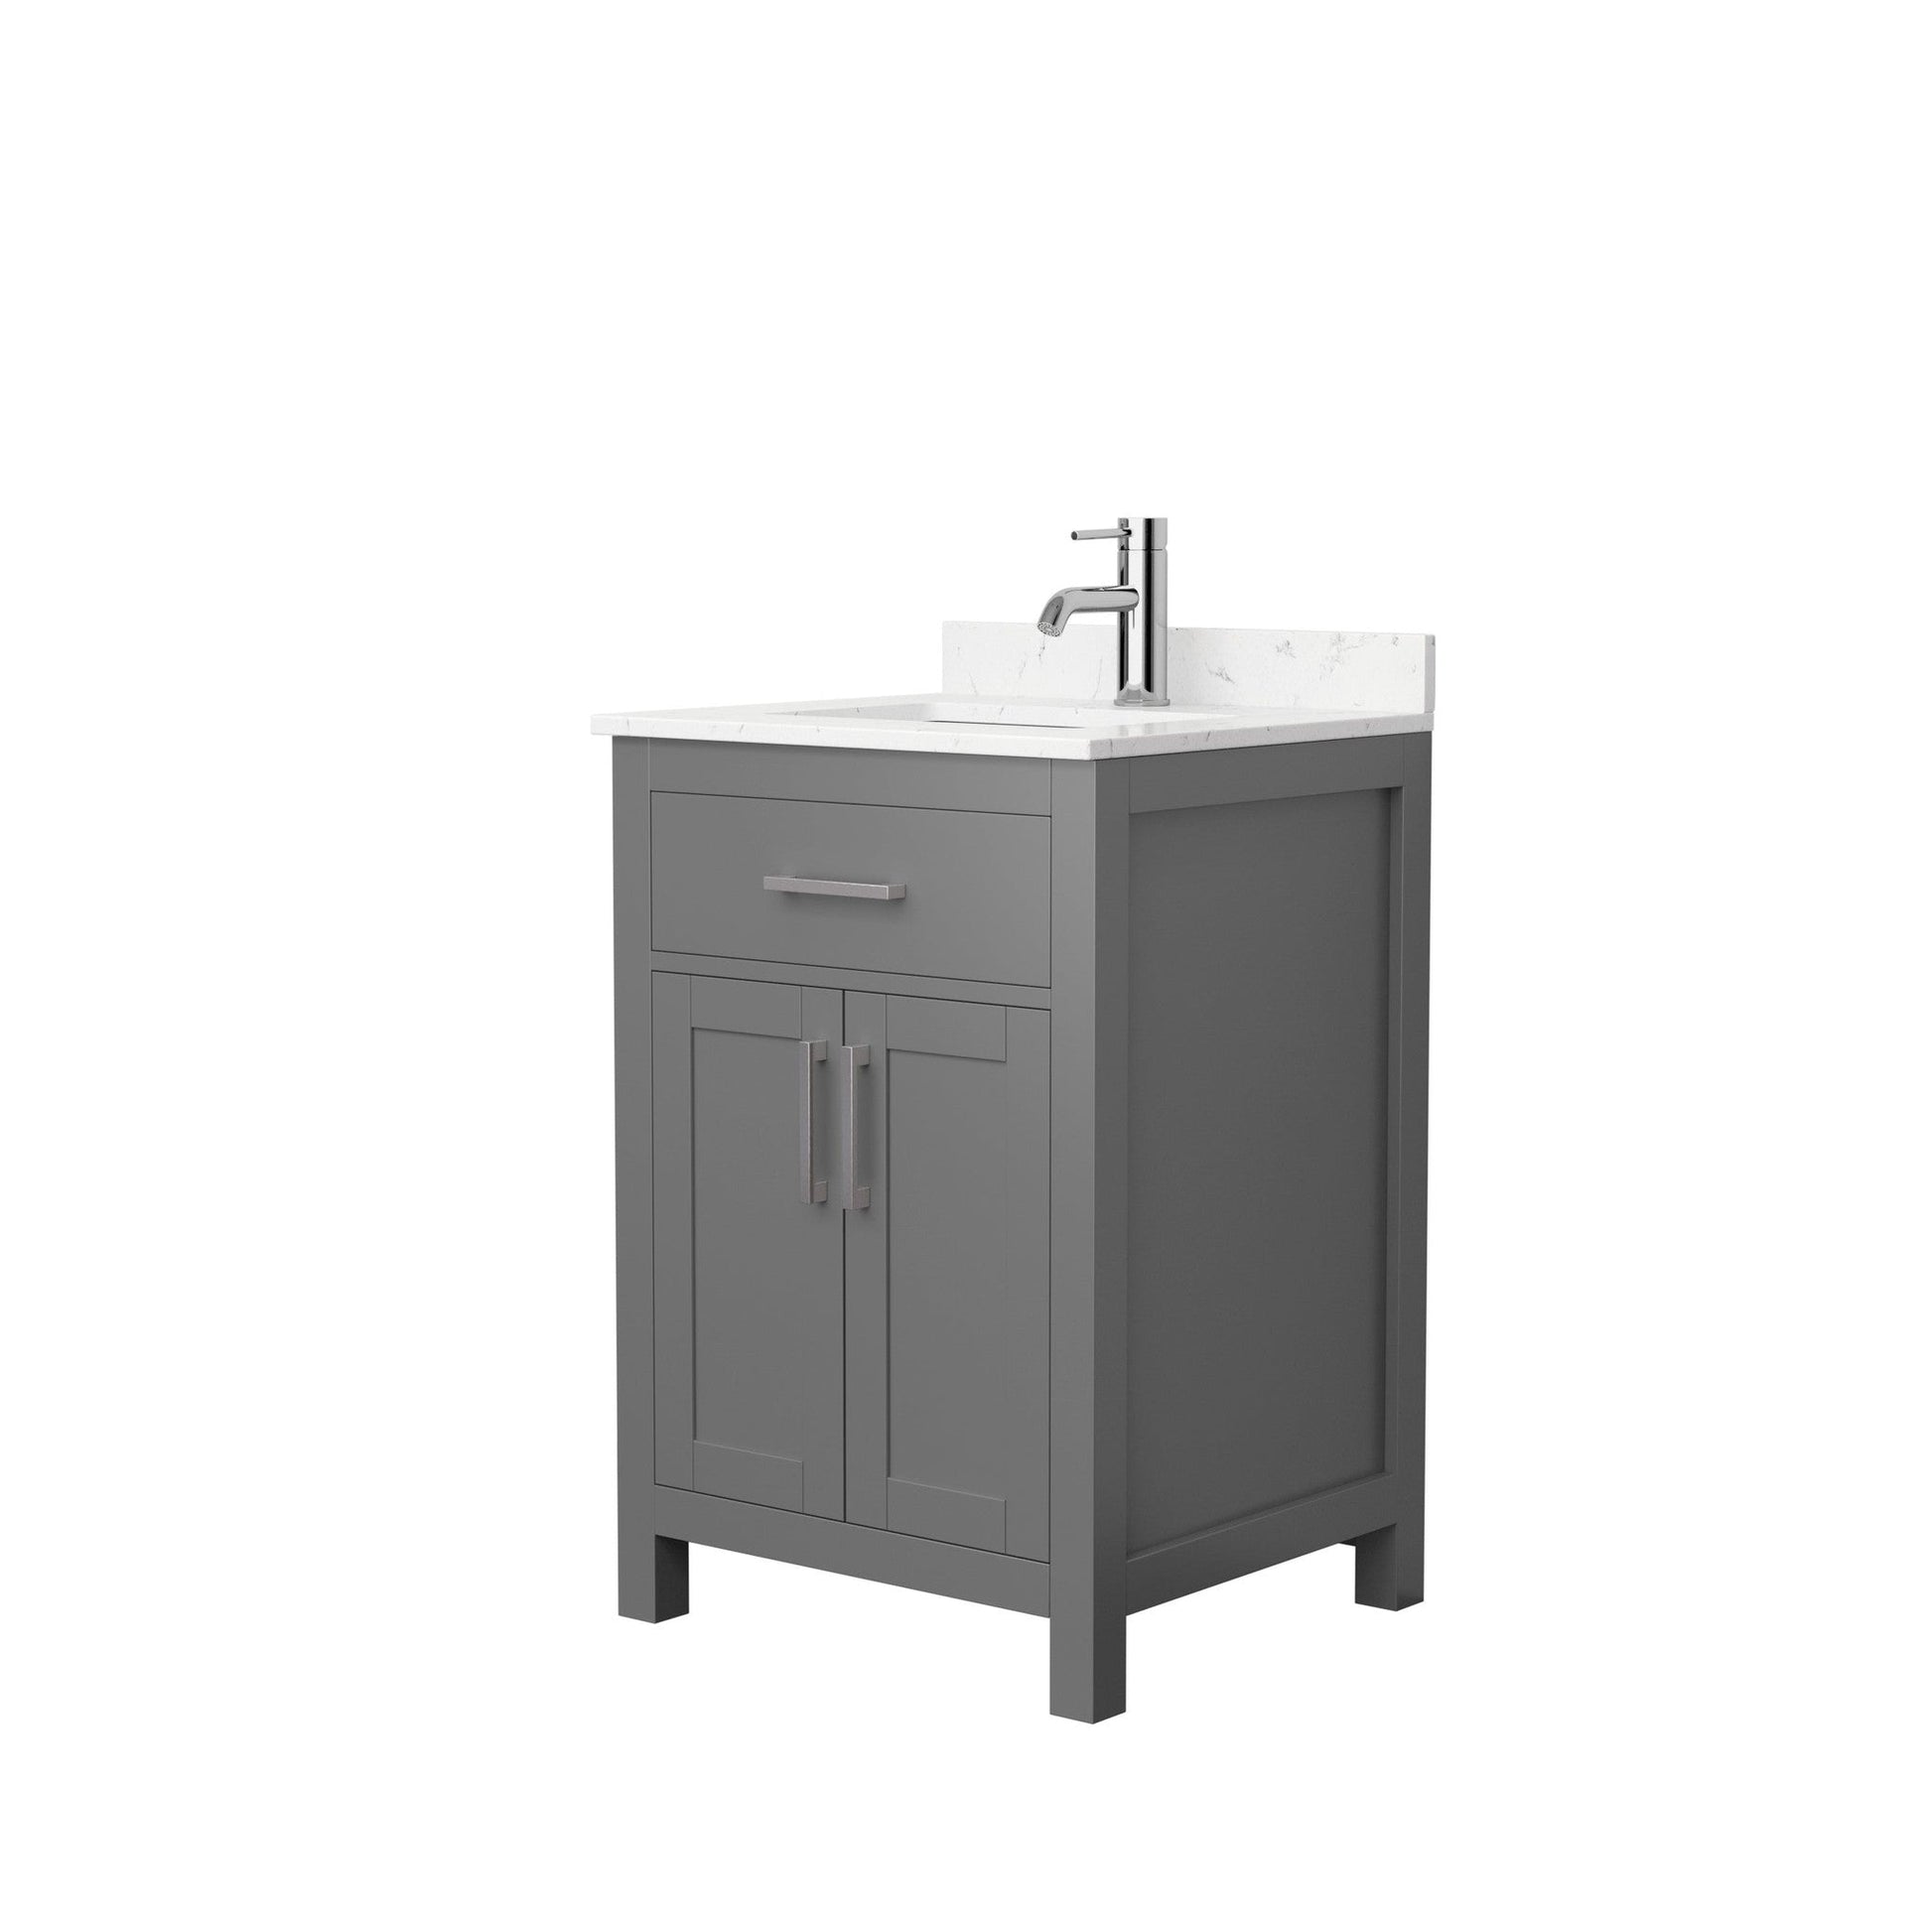 Beckett 24" Single Bathroom Vanity in Dark Gray, Carrara Cultured Marble Countertop, Undermount Square Sink, Brushed Nickel Trim